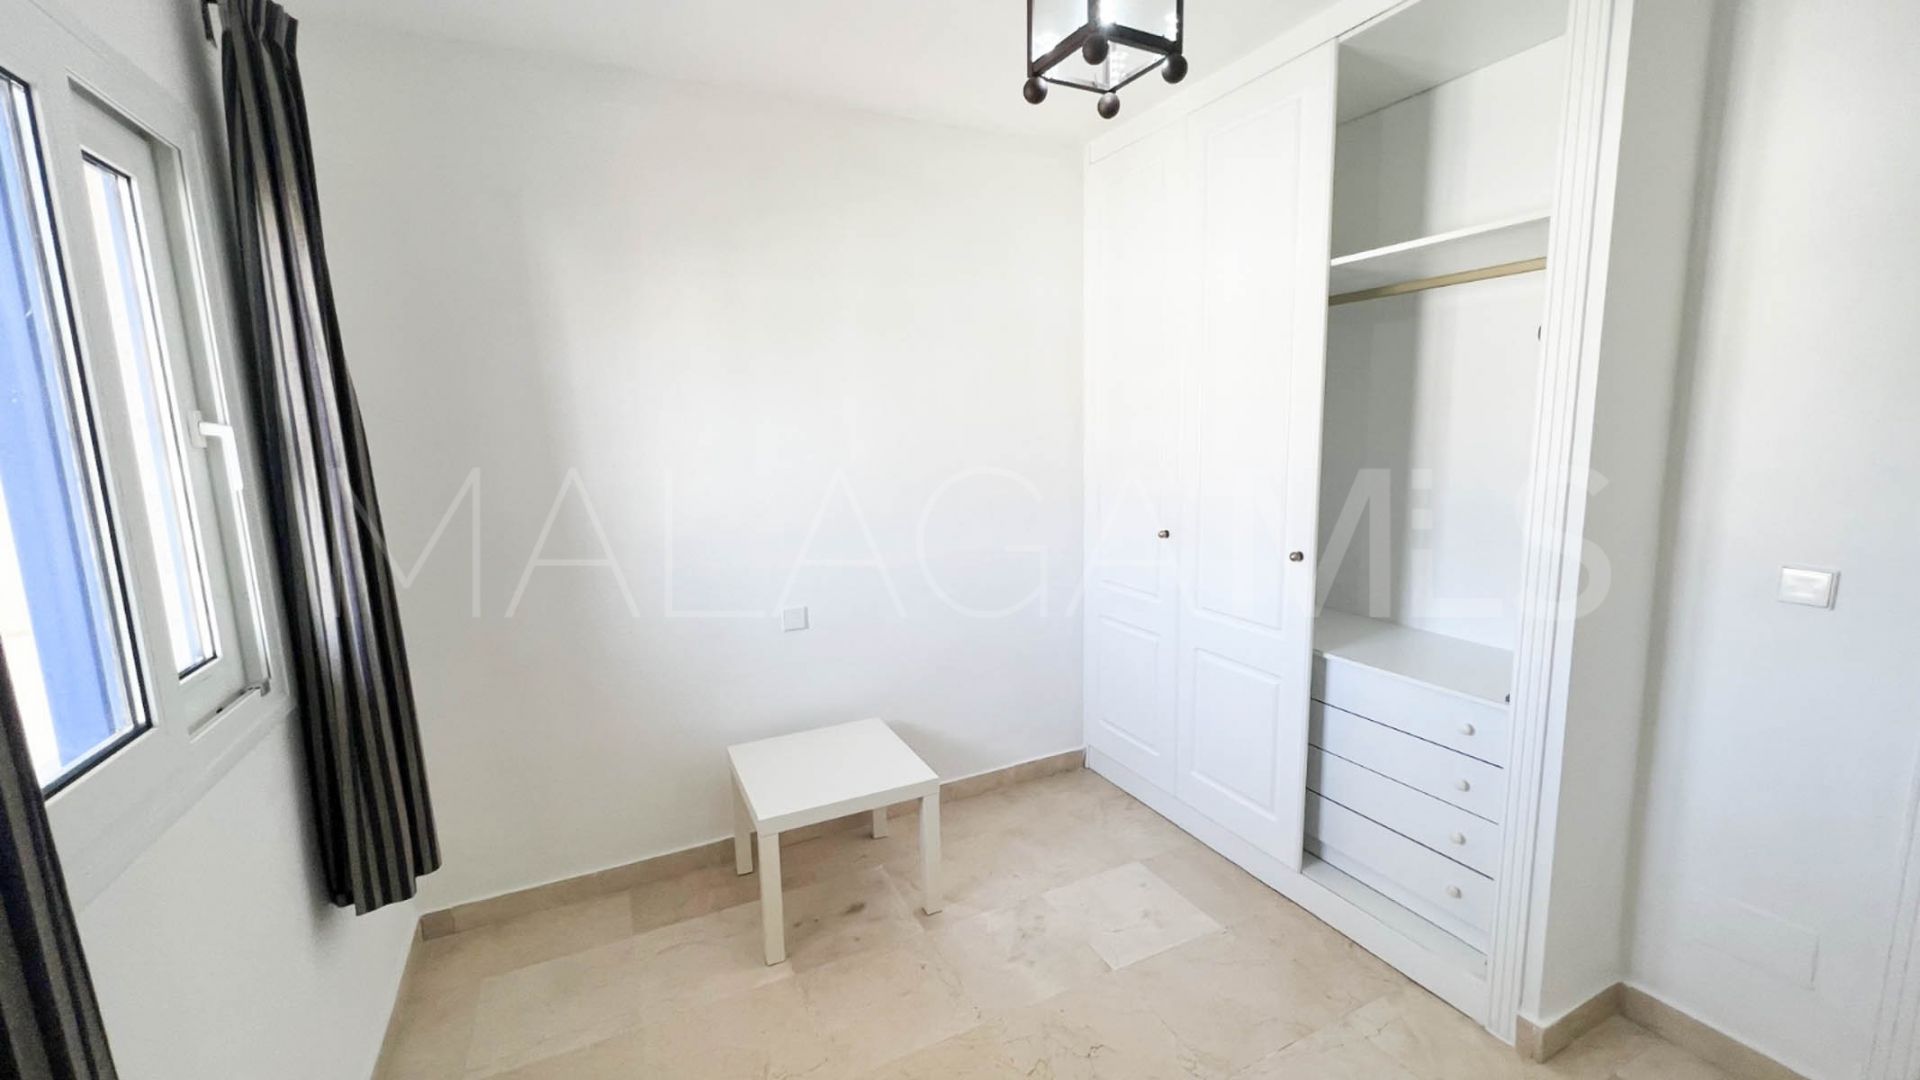 Apartment for sale in La Noria III with 3 bedrooms